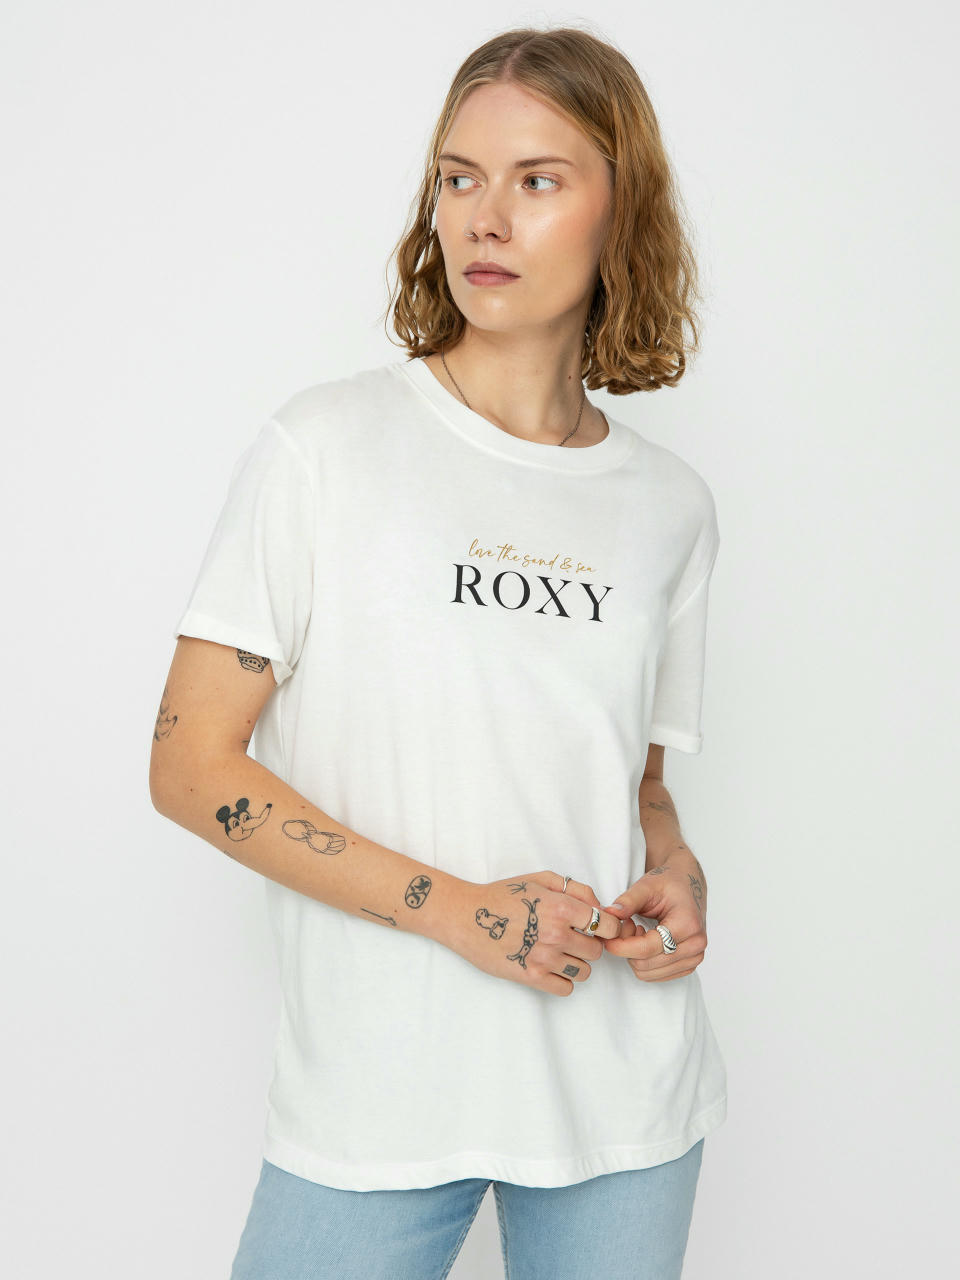 Urban Roxy - Sale SUPER-SHOP 